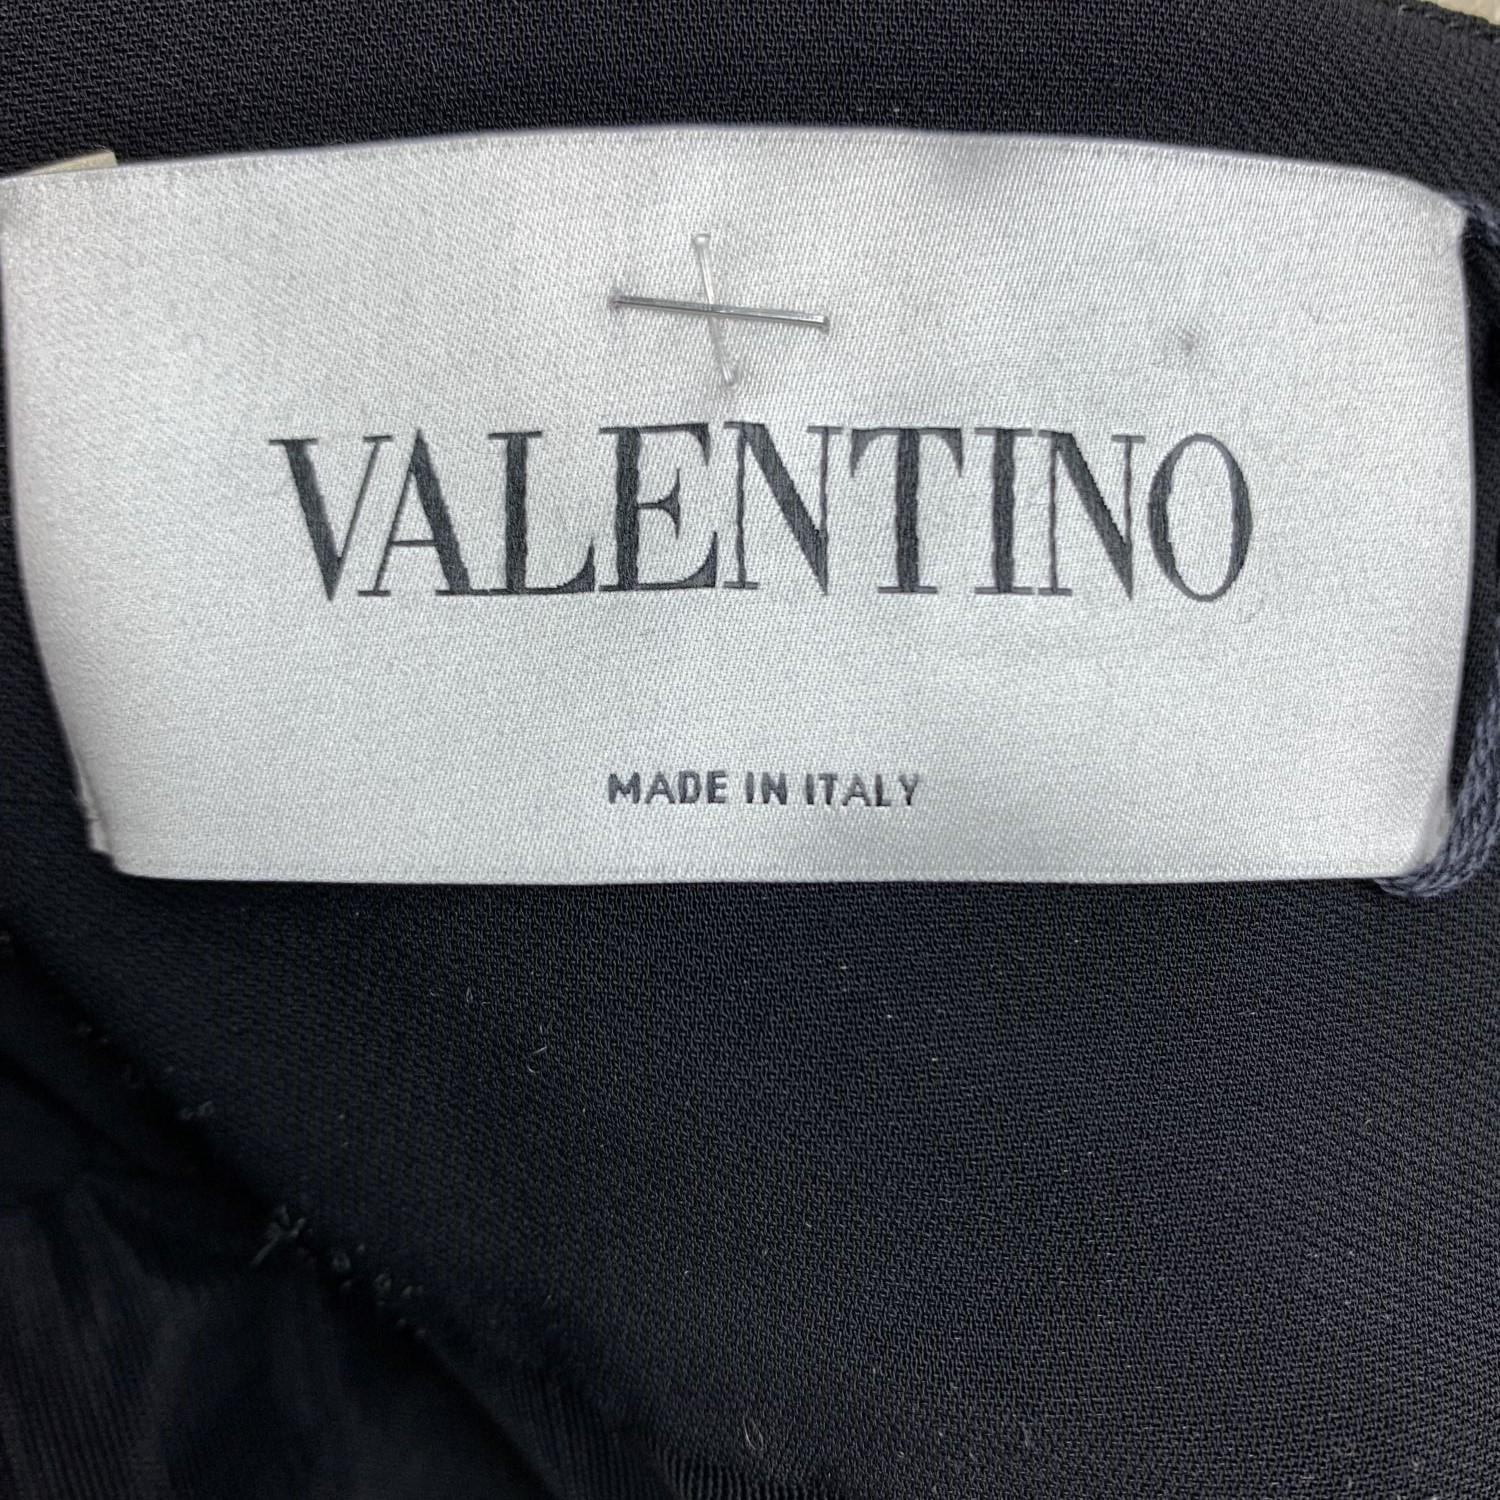 Women's Valentino Black Bustier Sleeveless Dress with Ruffles Size S